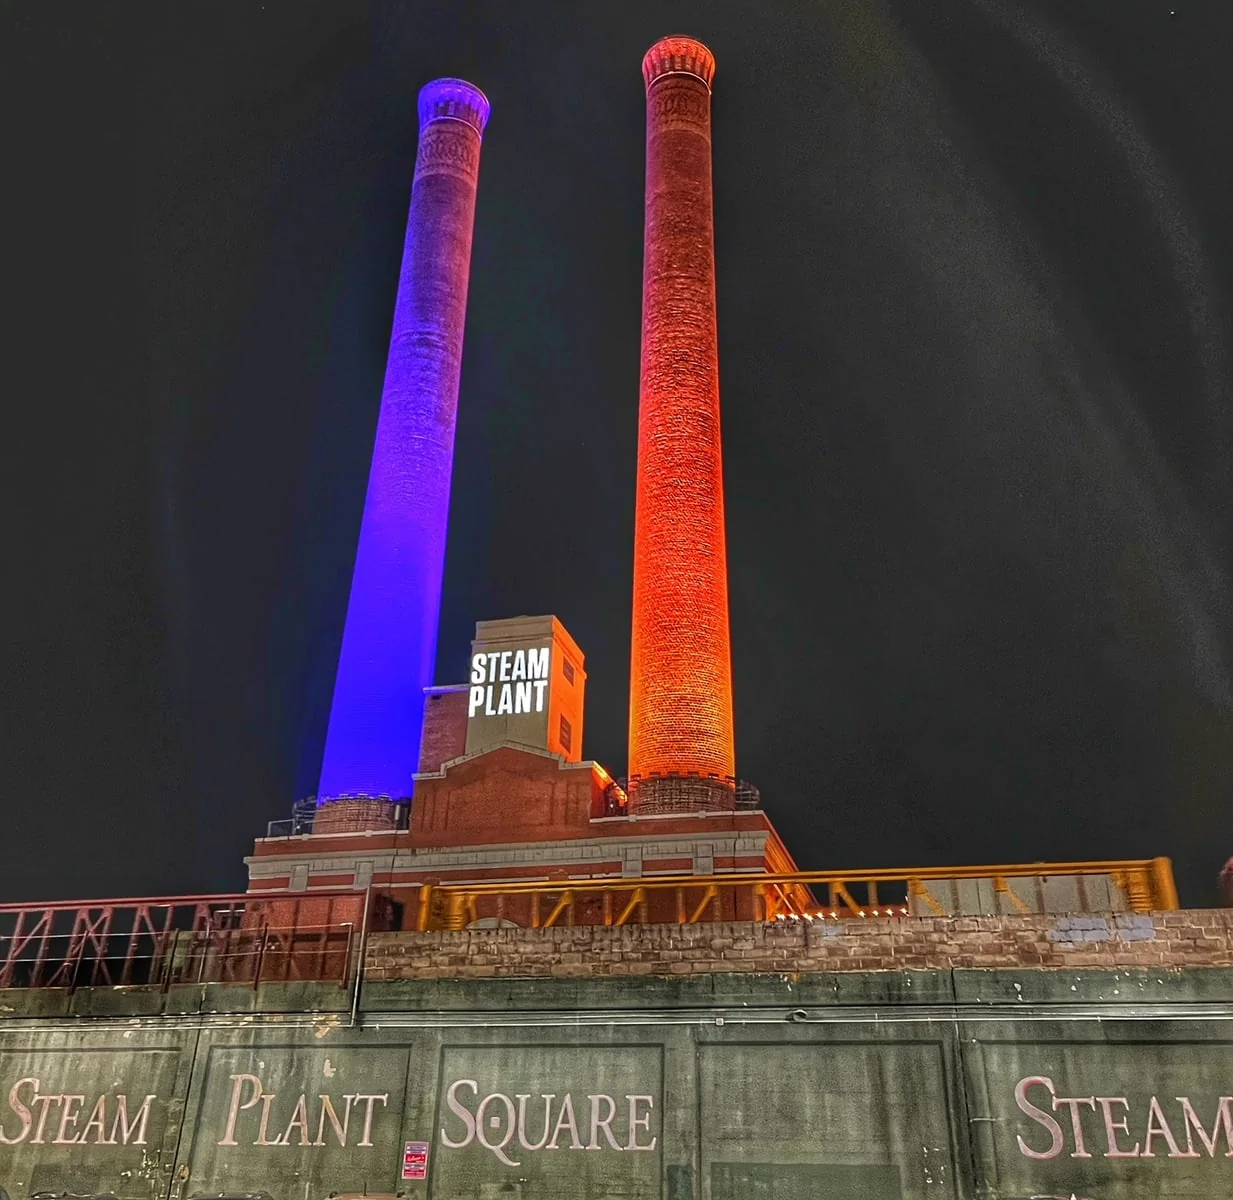 The Steam Plant Restaurant Spokane